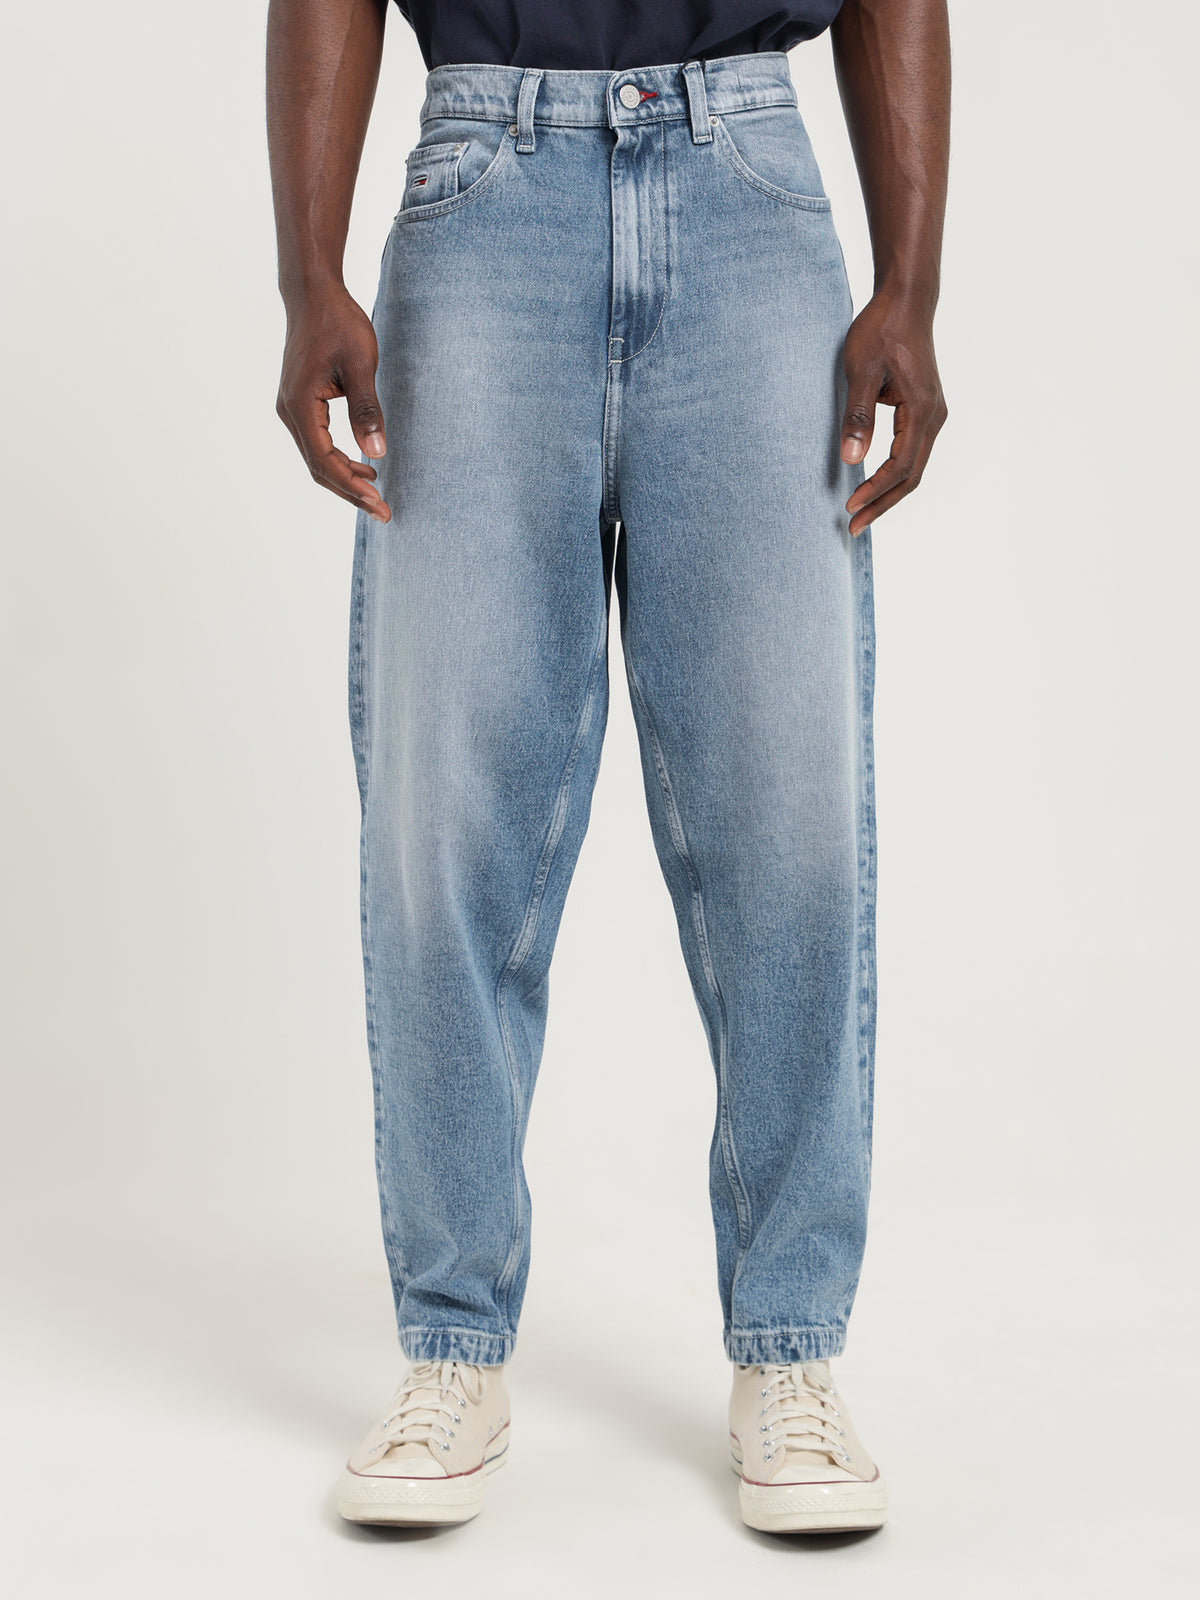 Bax Tapered Jeans in Denim